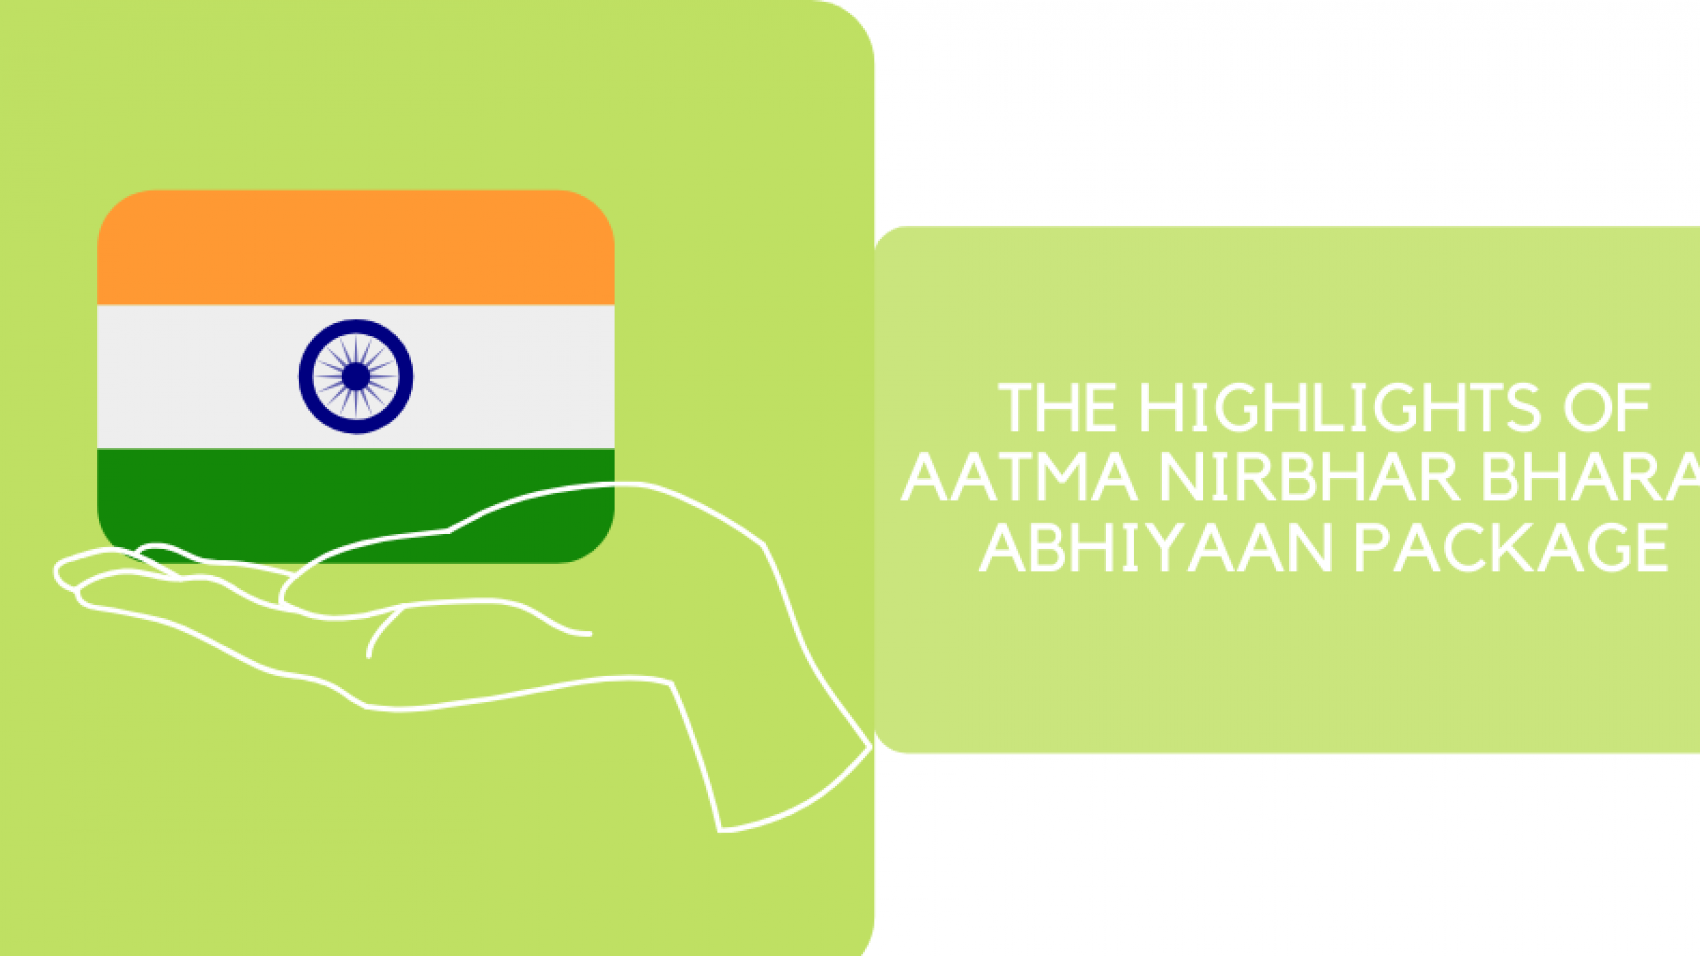 The Highlights of Aatma Nirbhar Bharat Abhiyaan Package